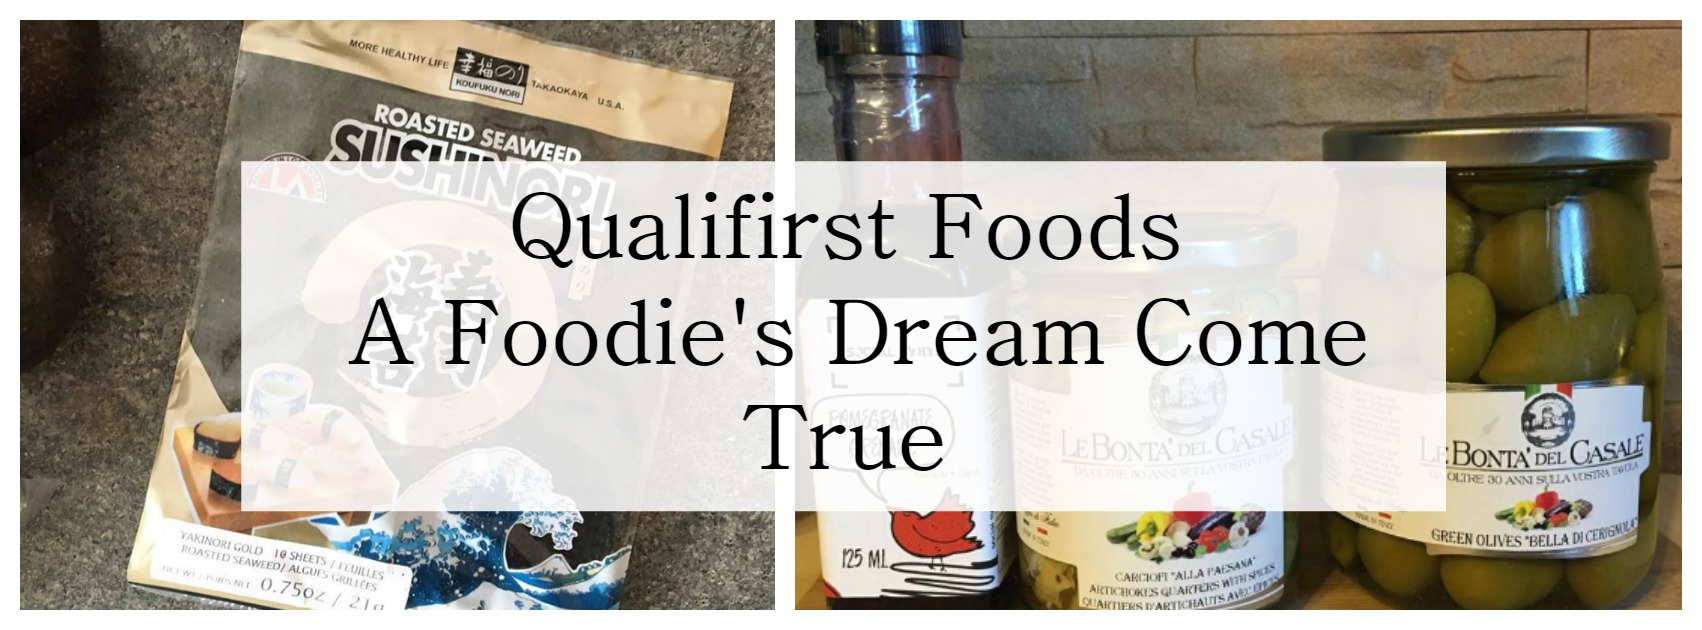 Qualifirst Foods, A Foodie’s Dream Come True